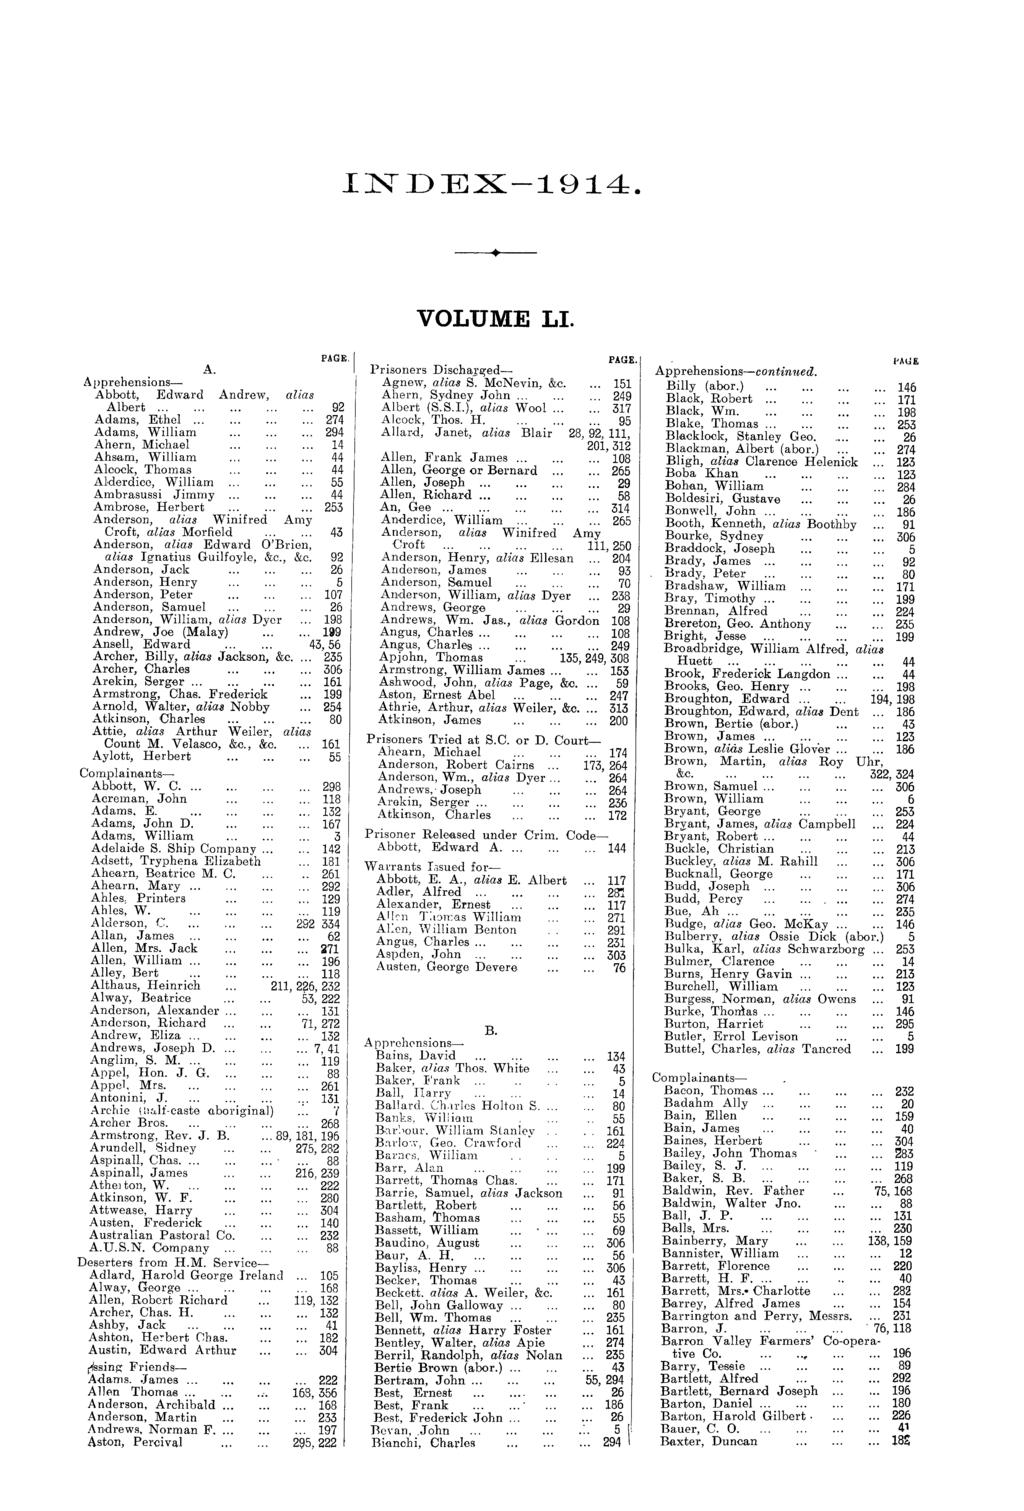 INDEX--1914. VOLUME LI. A. Abbott, Edward Andrew, alias Albert............... 92 Adams, Ethel............ 274 Adams, William......... 294 Ahern, Michael......... 14 Ahsam, William......... 44 Alcock, Thomas.